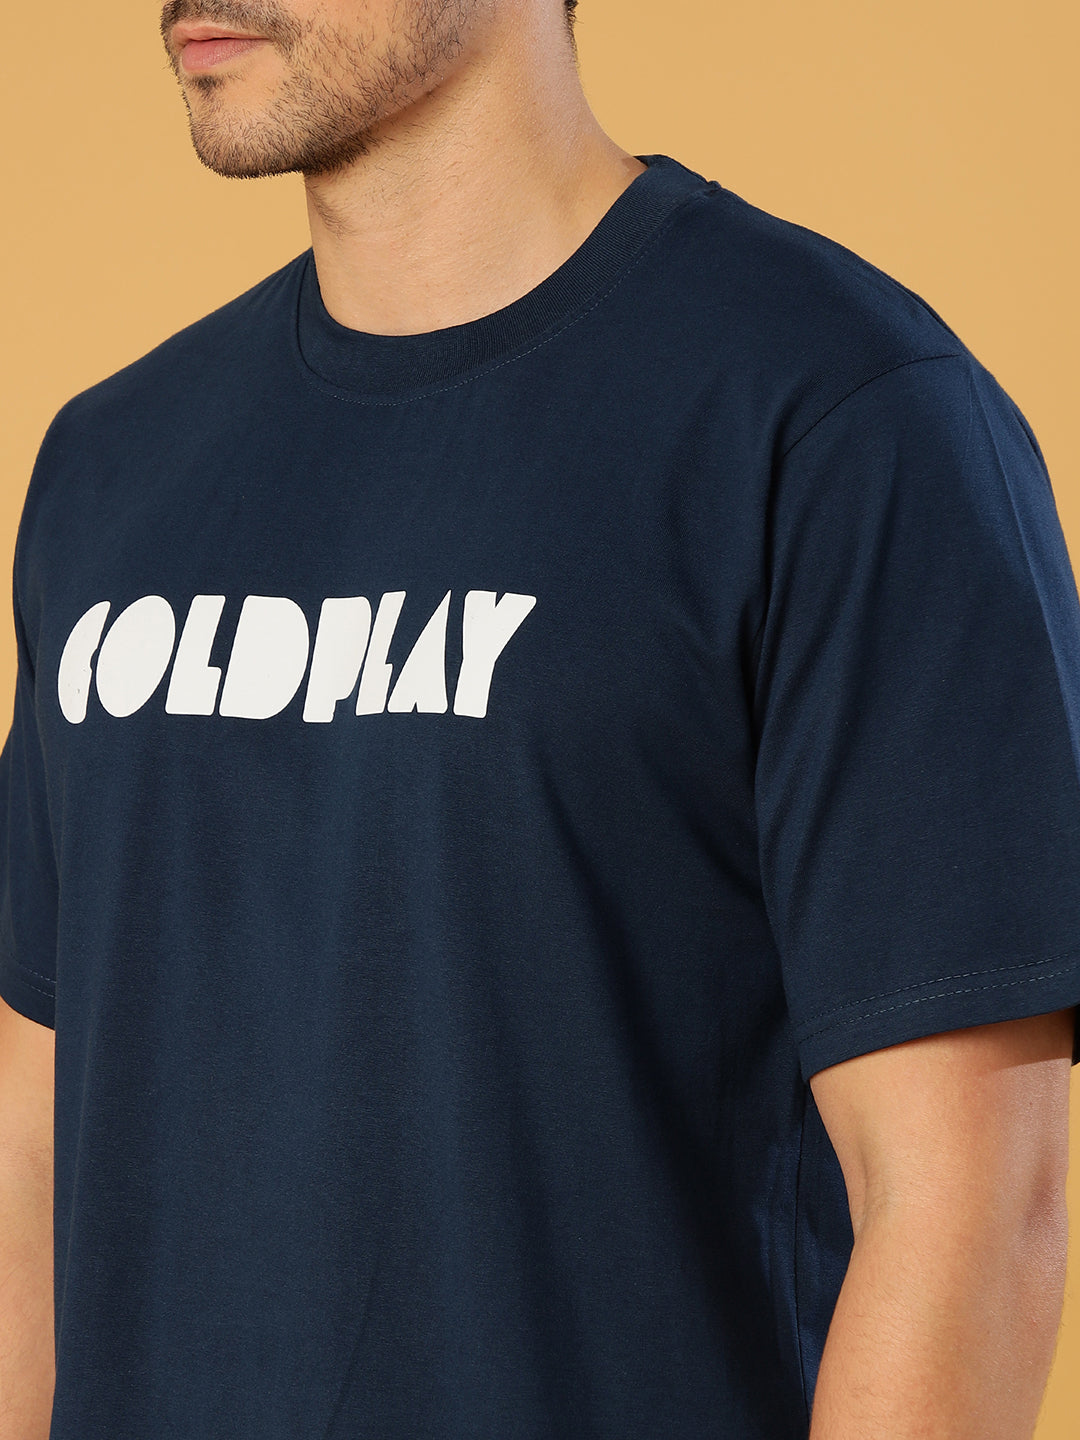 Cold Play Dark Blue Regular T-Shirts